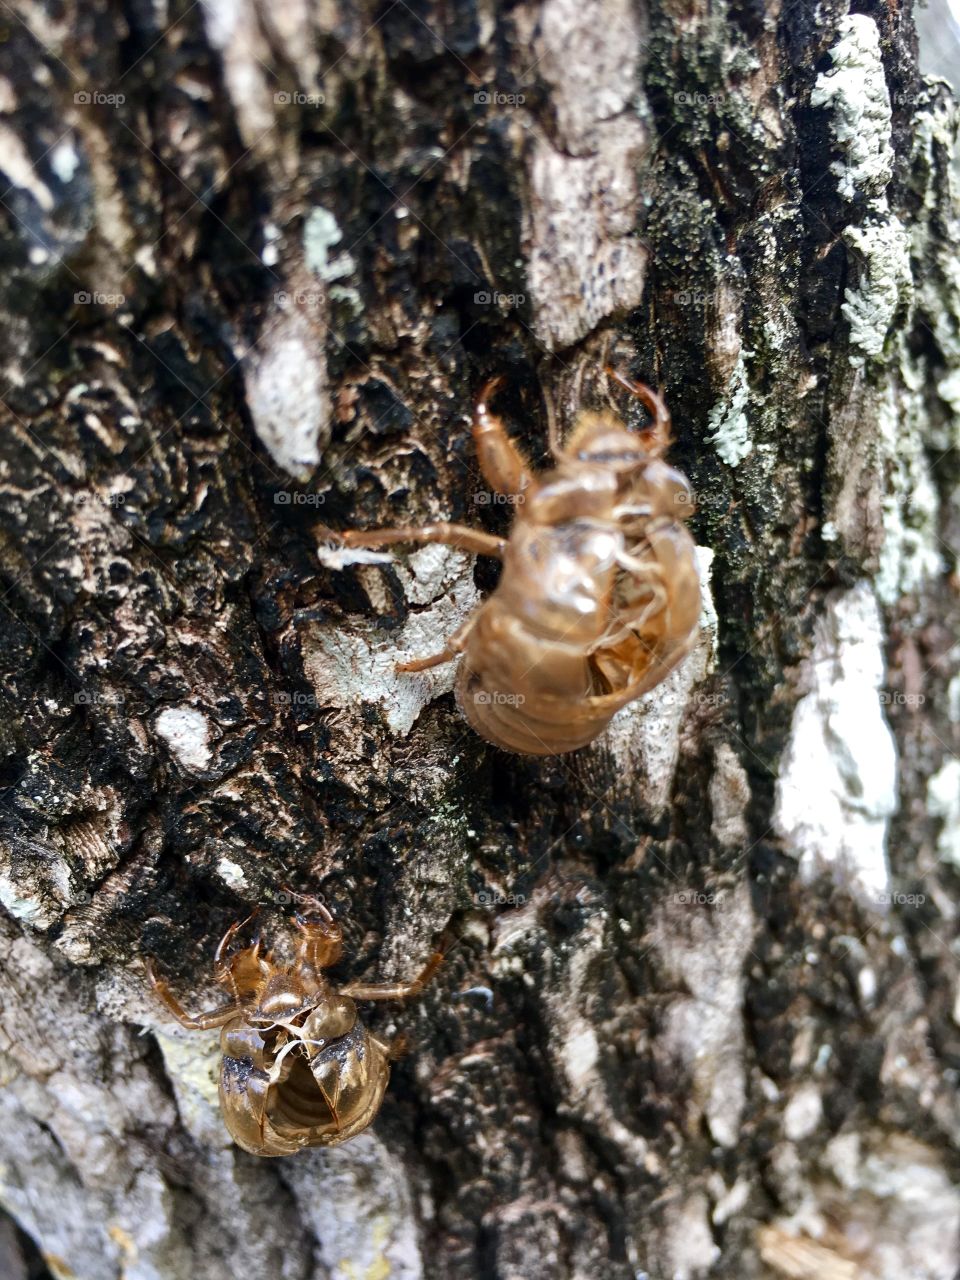 Cicada Shells